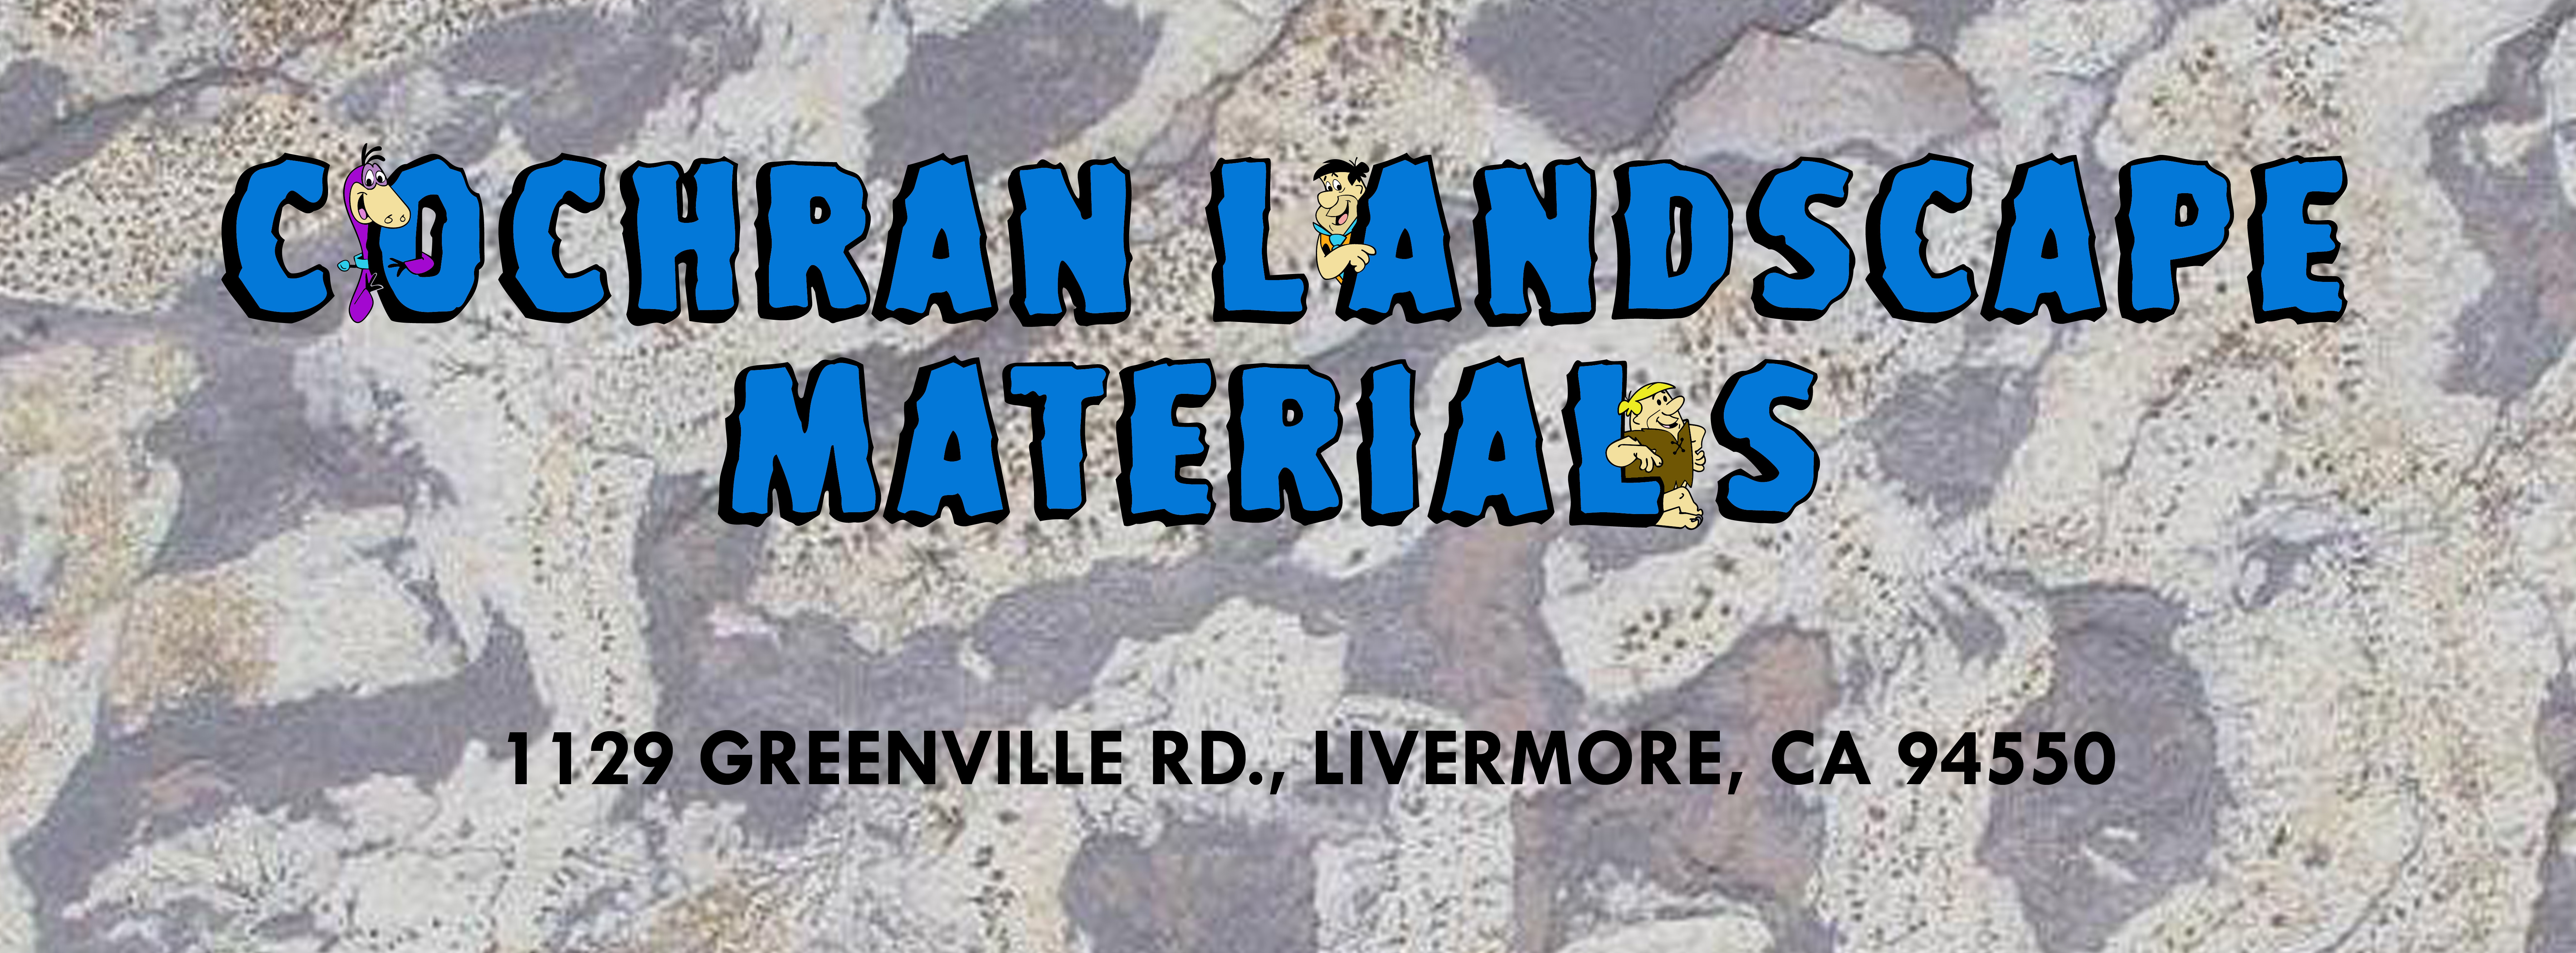 Cochran Landscape Materials Inc, Cochran Landscaping Easley Sc